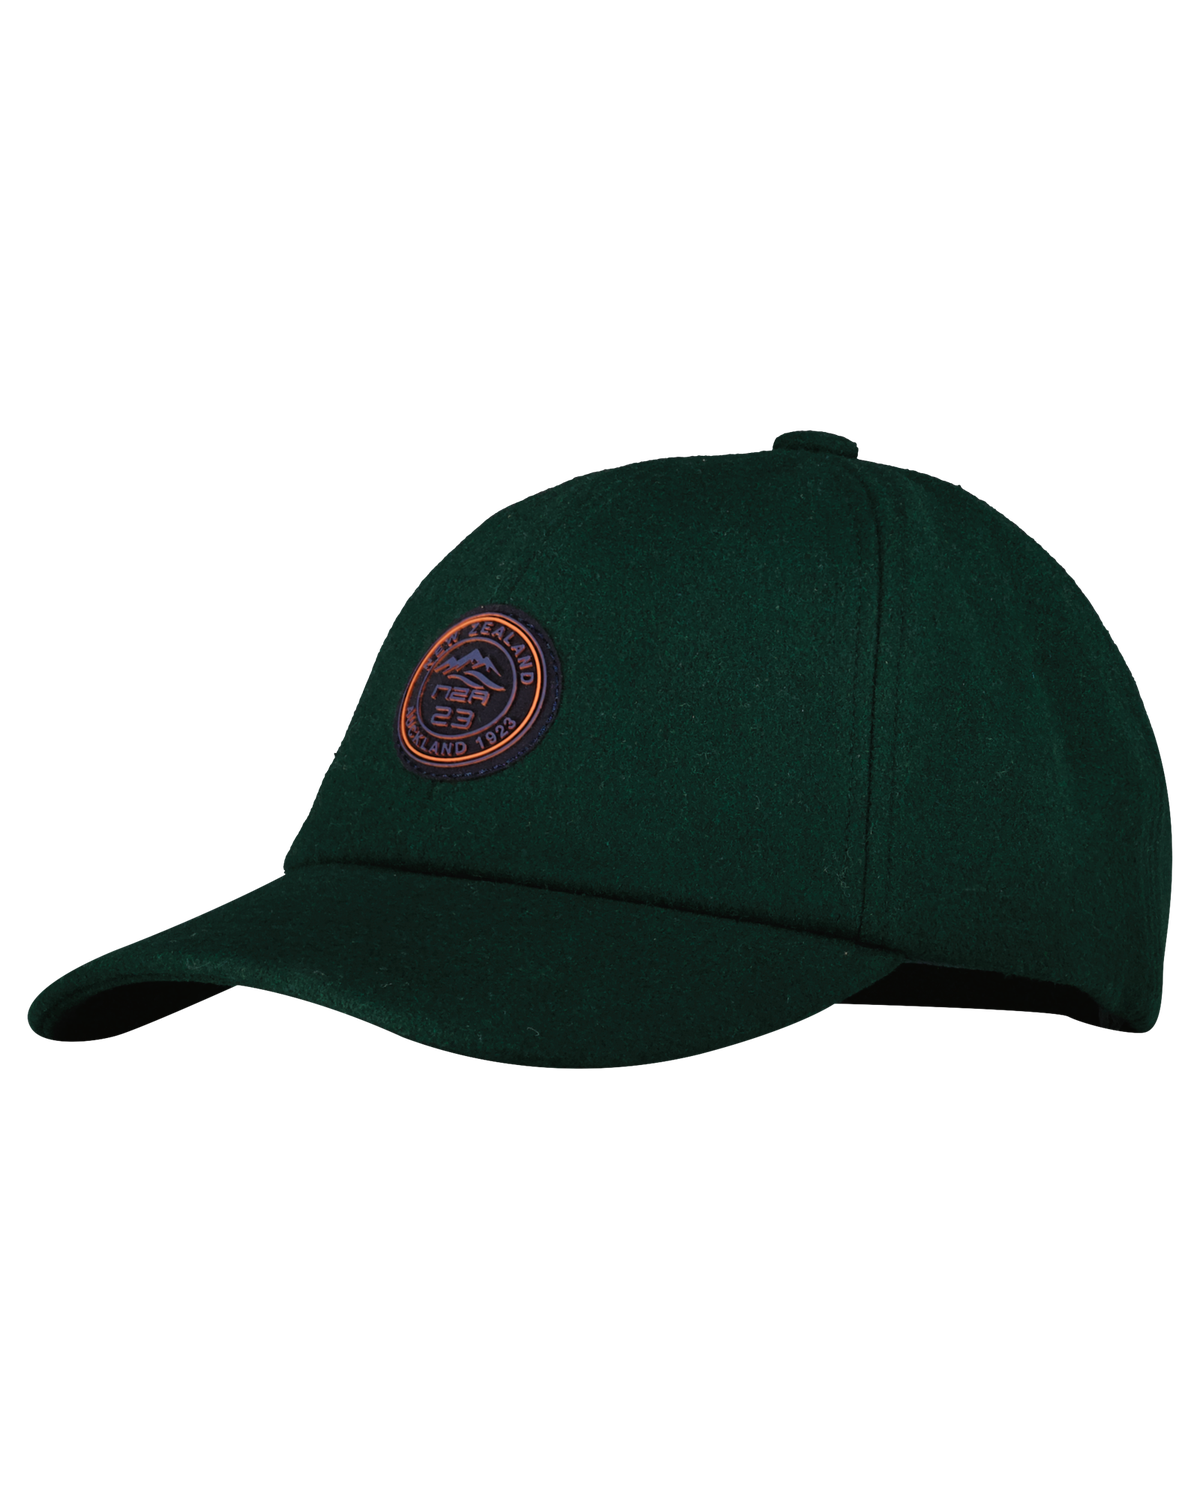 Wool cap - Crushing Green